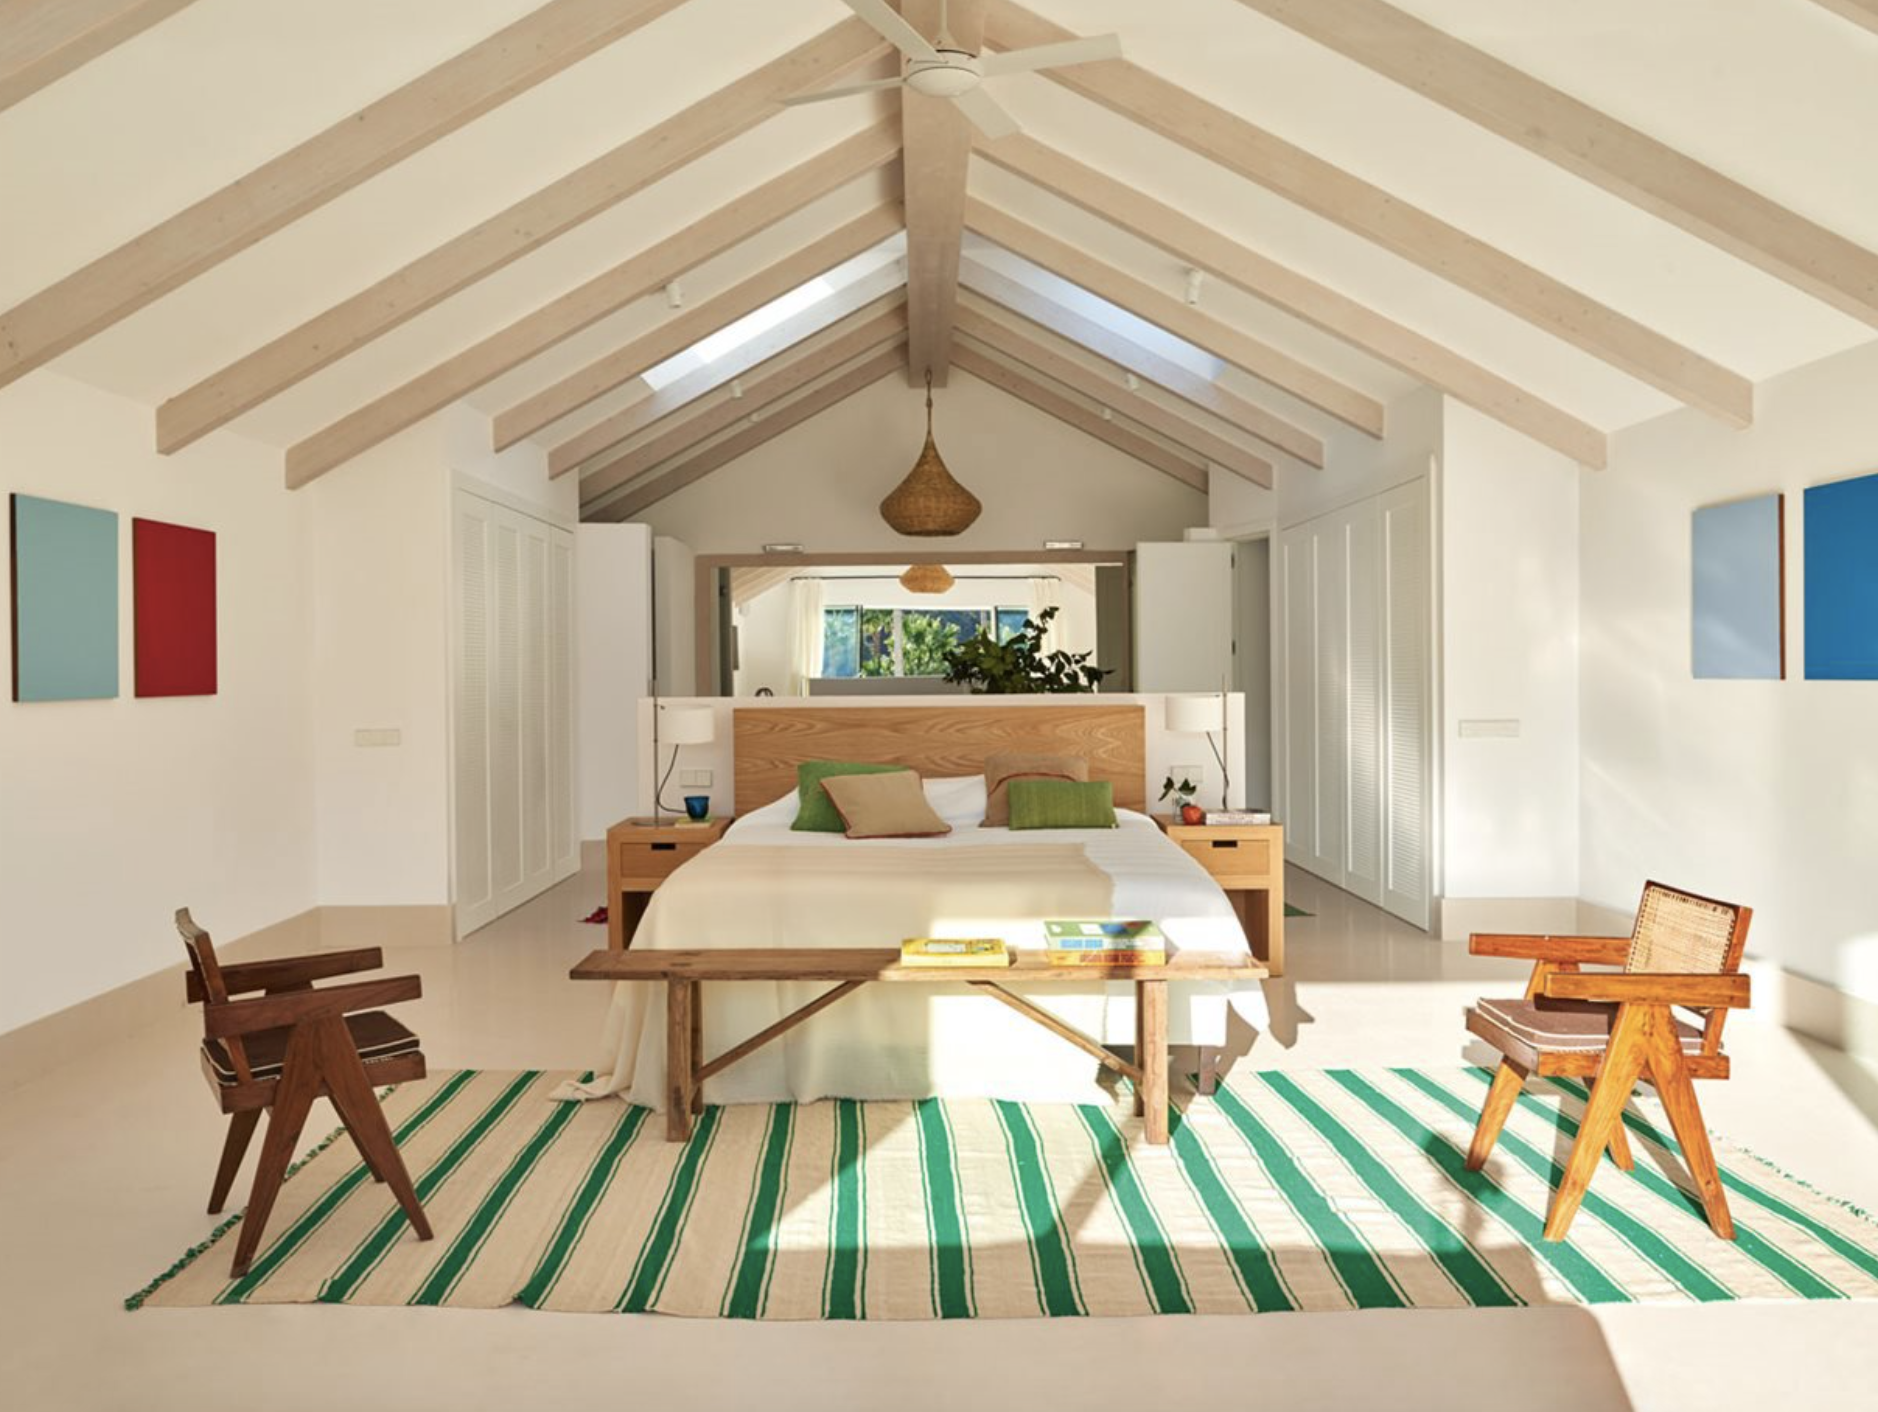 dormitorio4 madera butaca rayas vigas techo cama cabecero madera